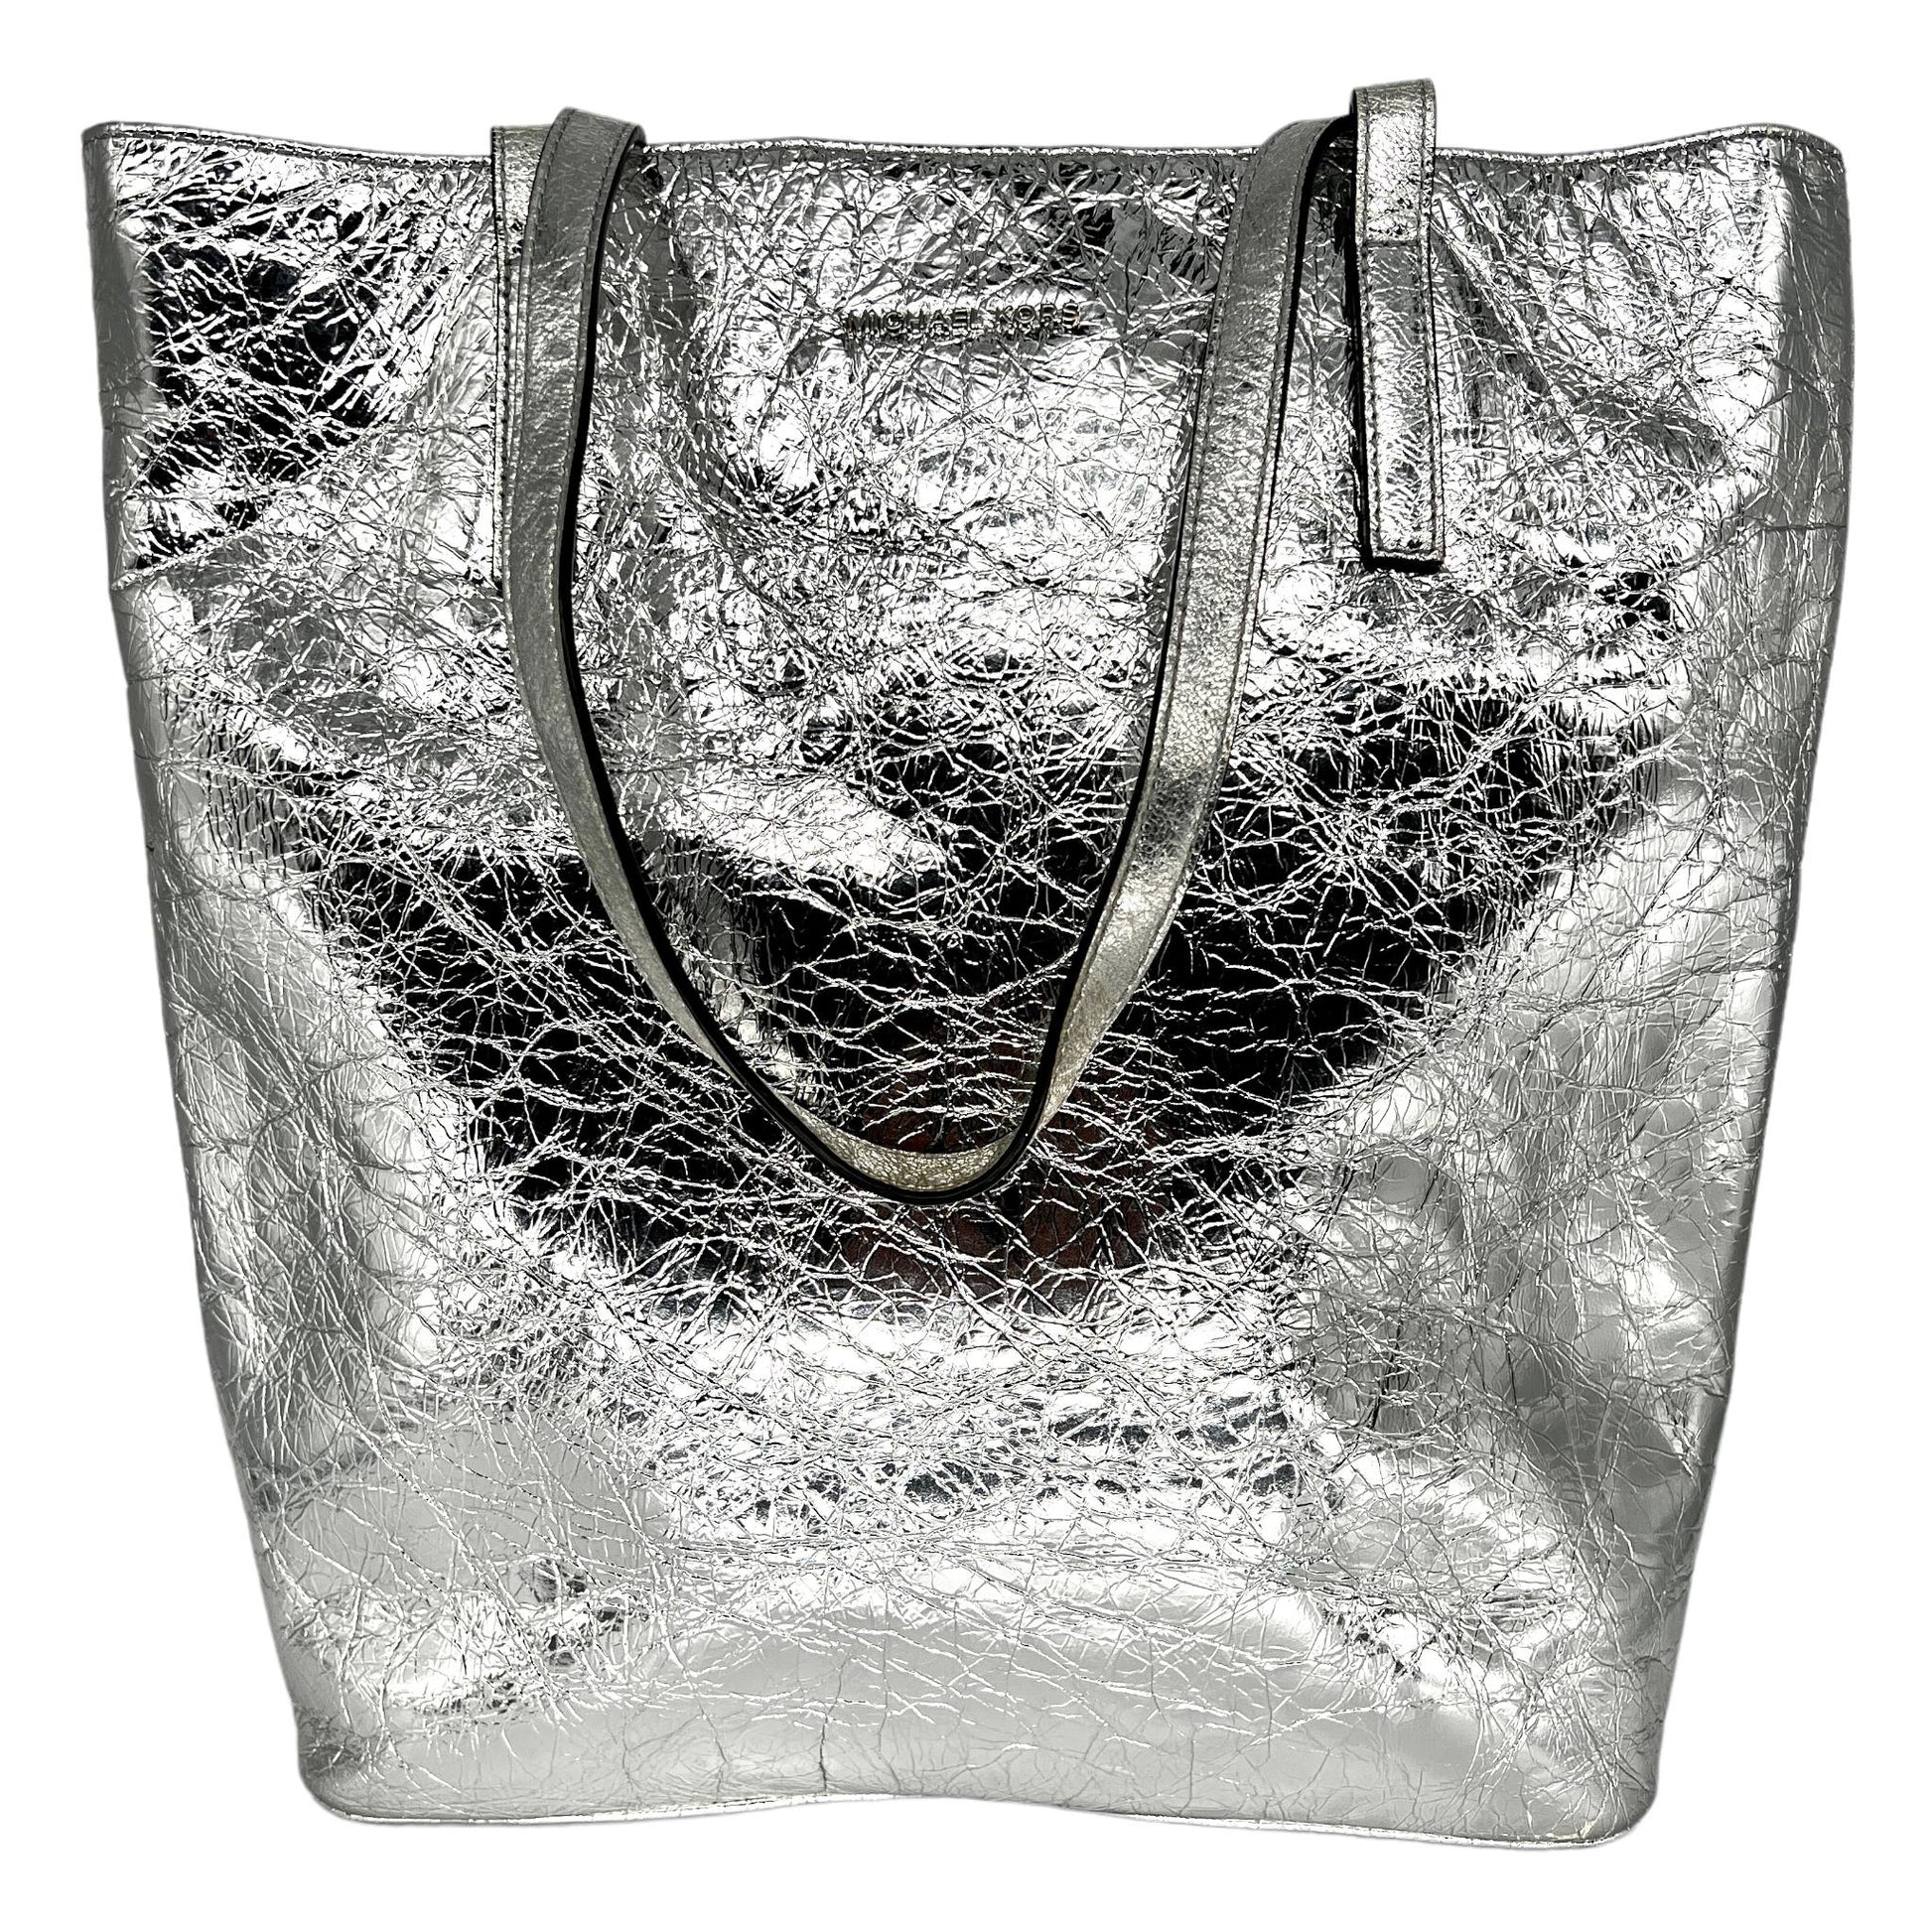 Michael Kors Large Leather Tote Bag